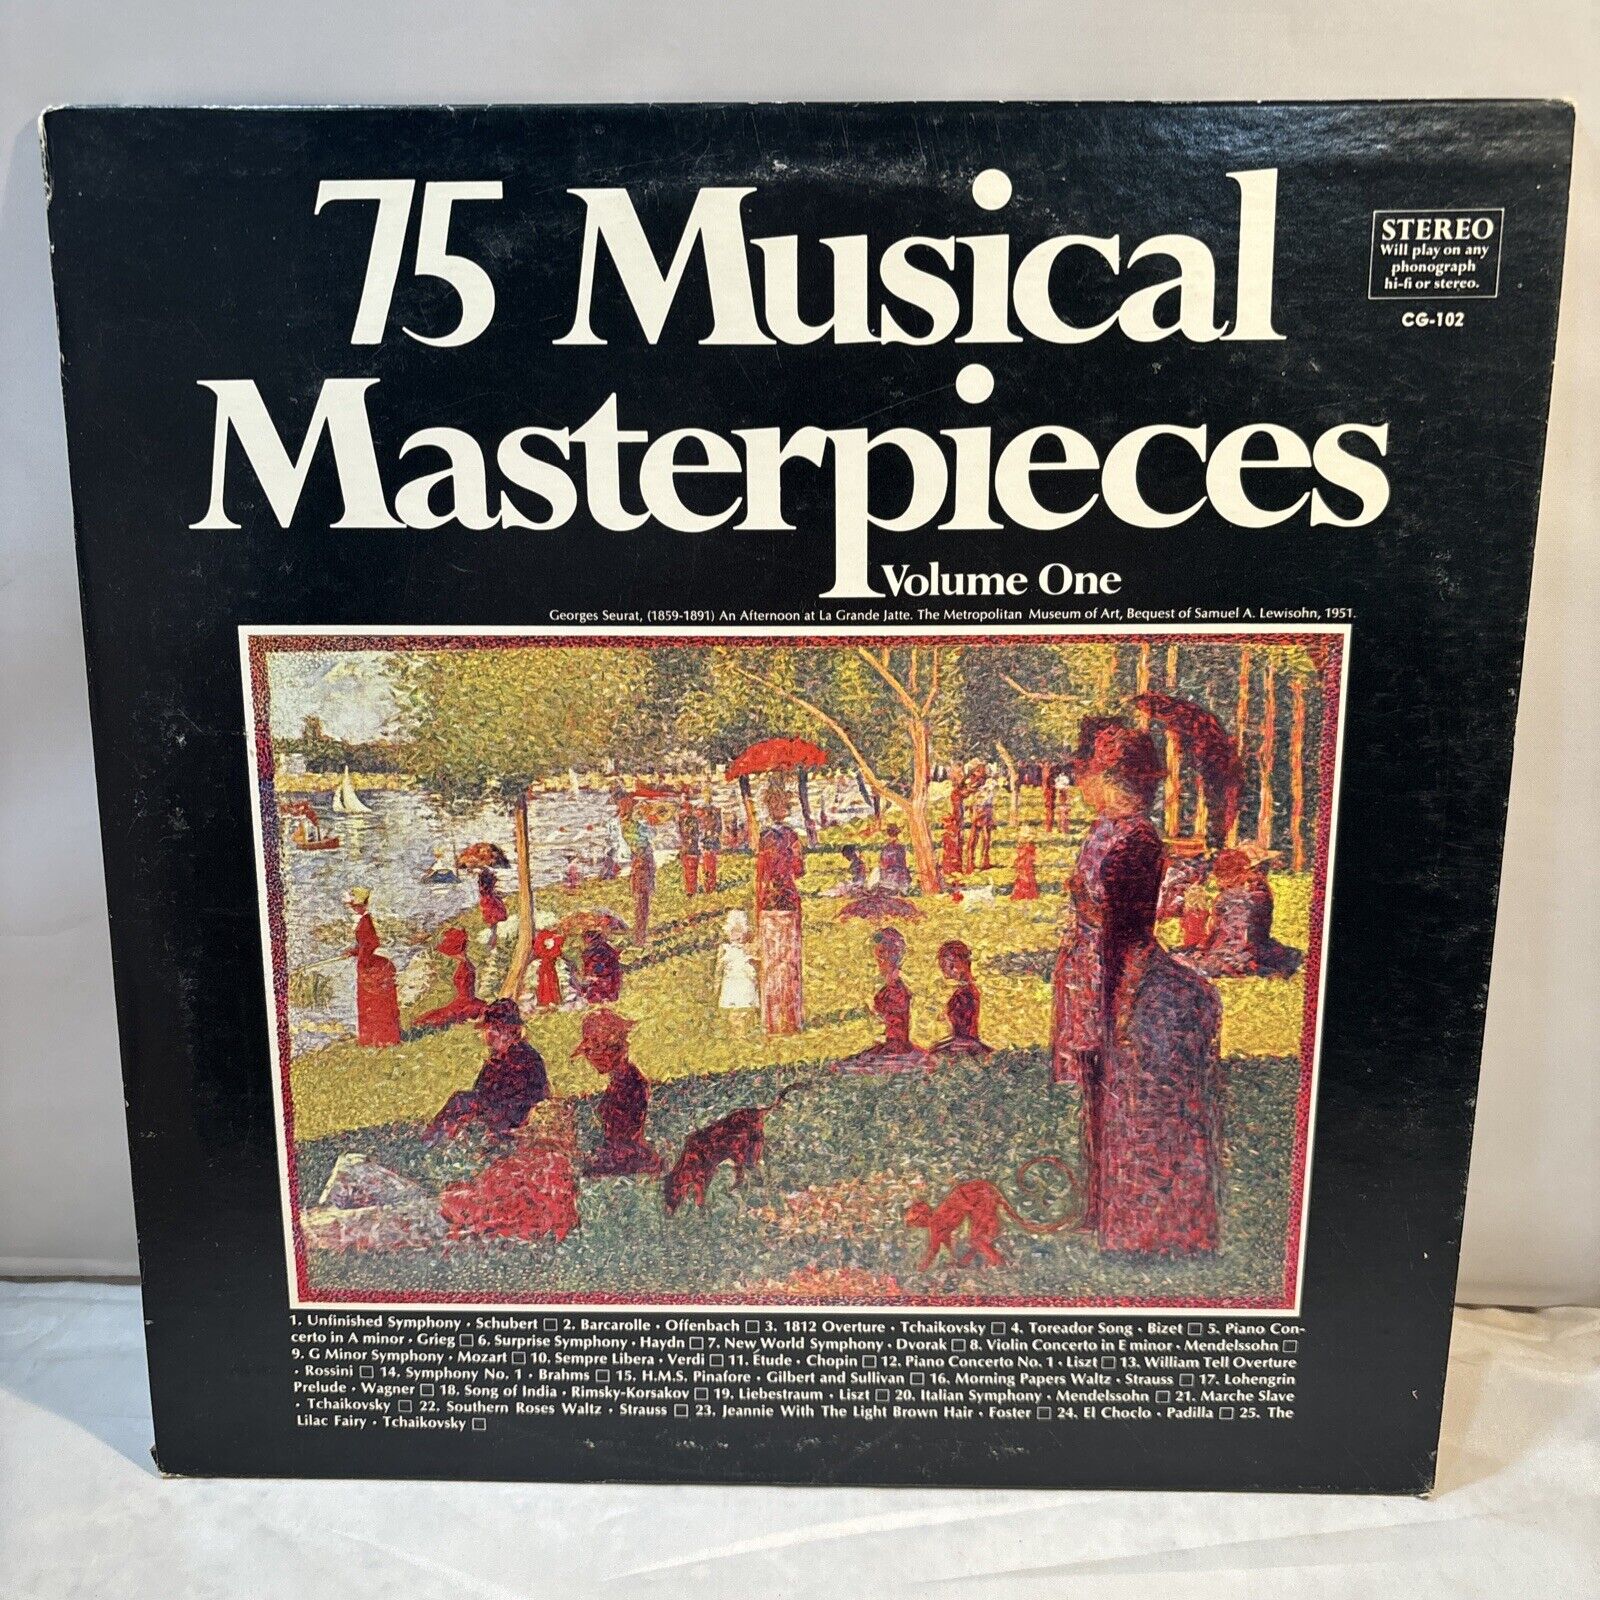 Vintage 75 Musical Masterpieces Volume One Record 2 Masterpiece CG-102